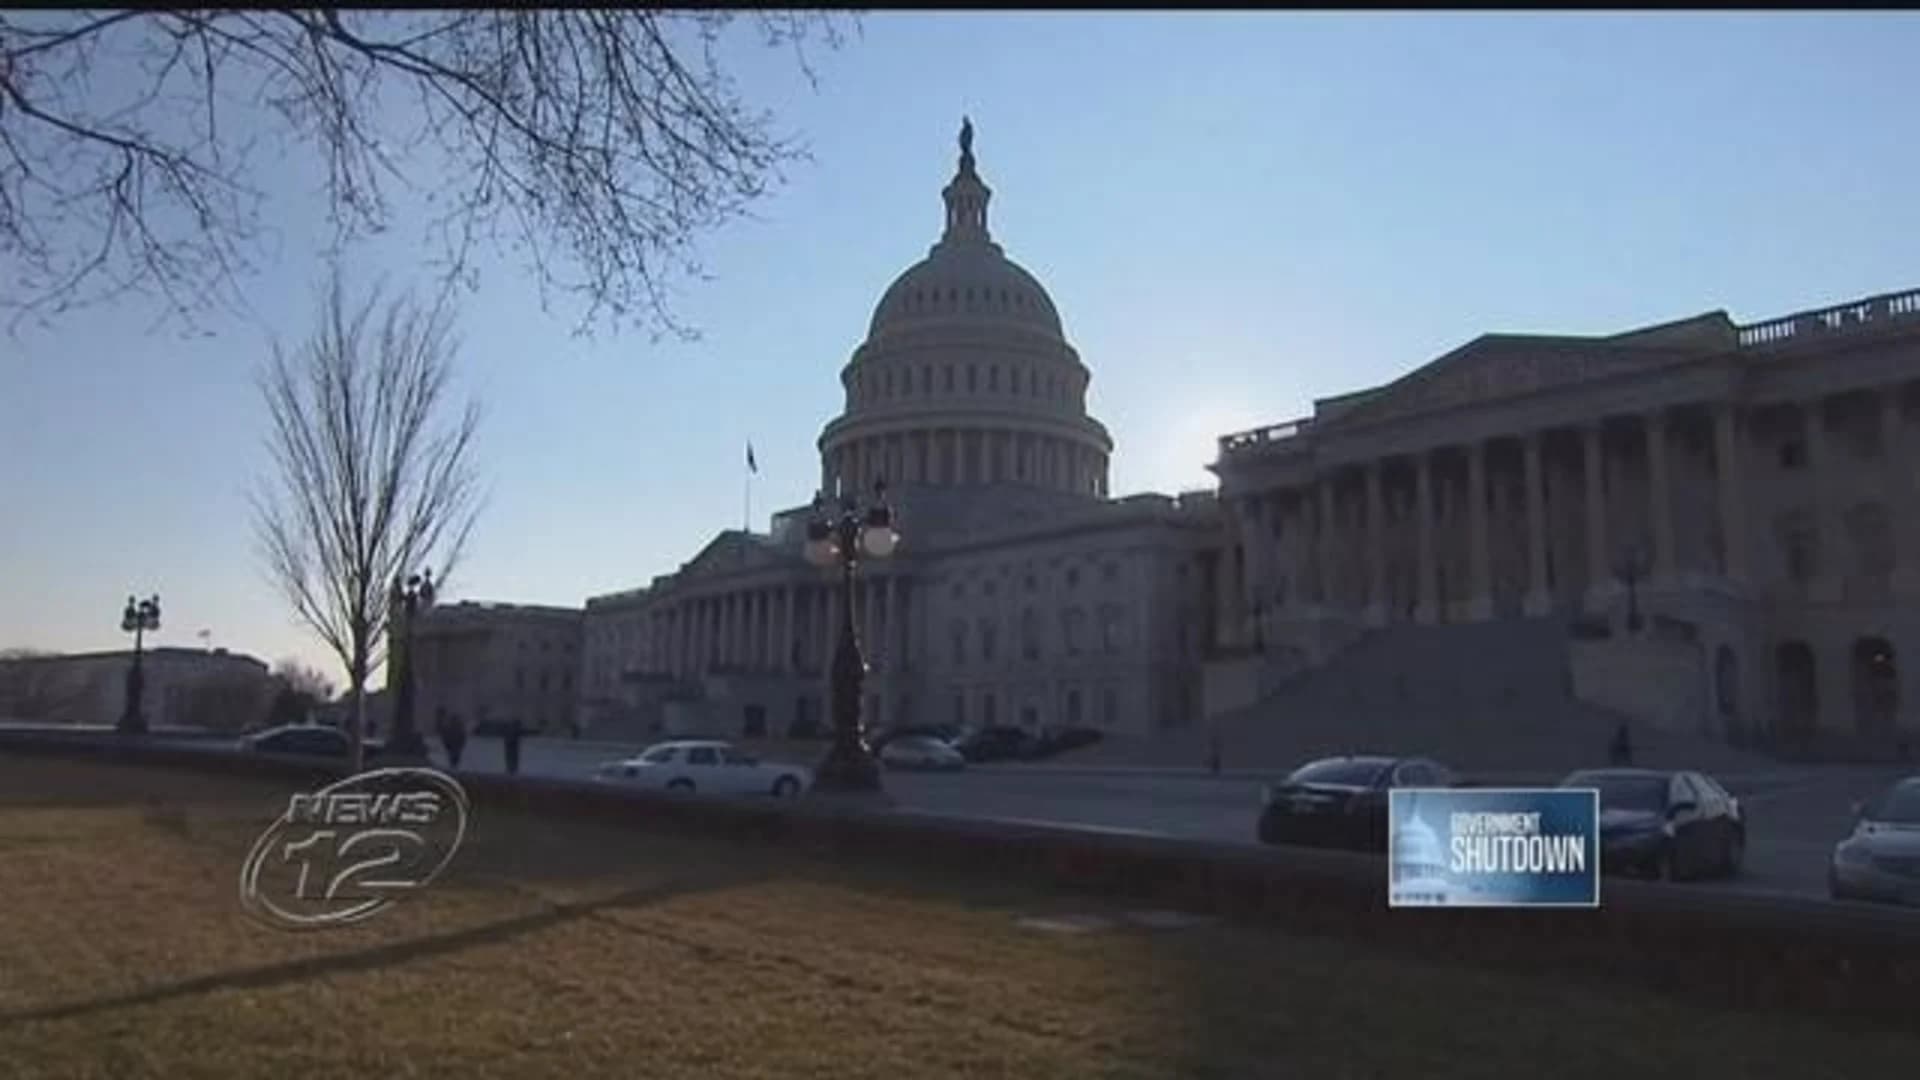 Gov't shutdown seems near; Senate fails to approve funding